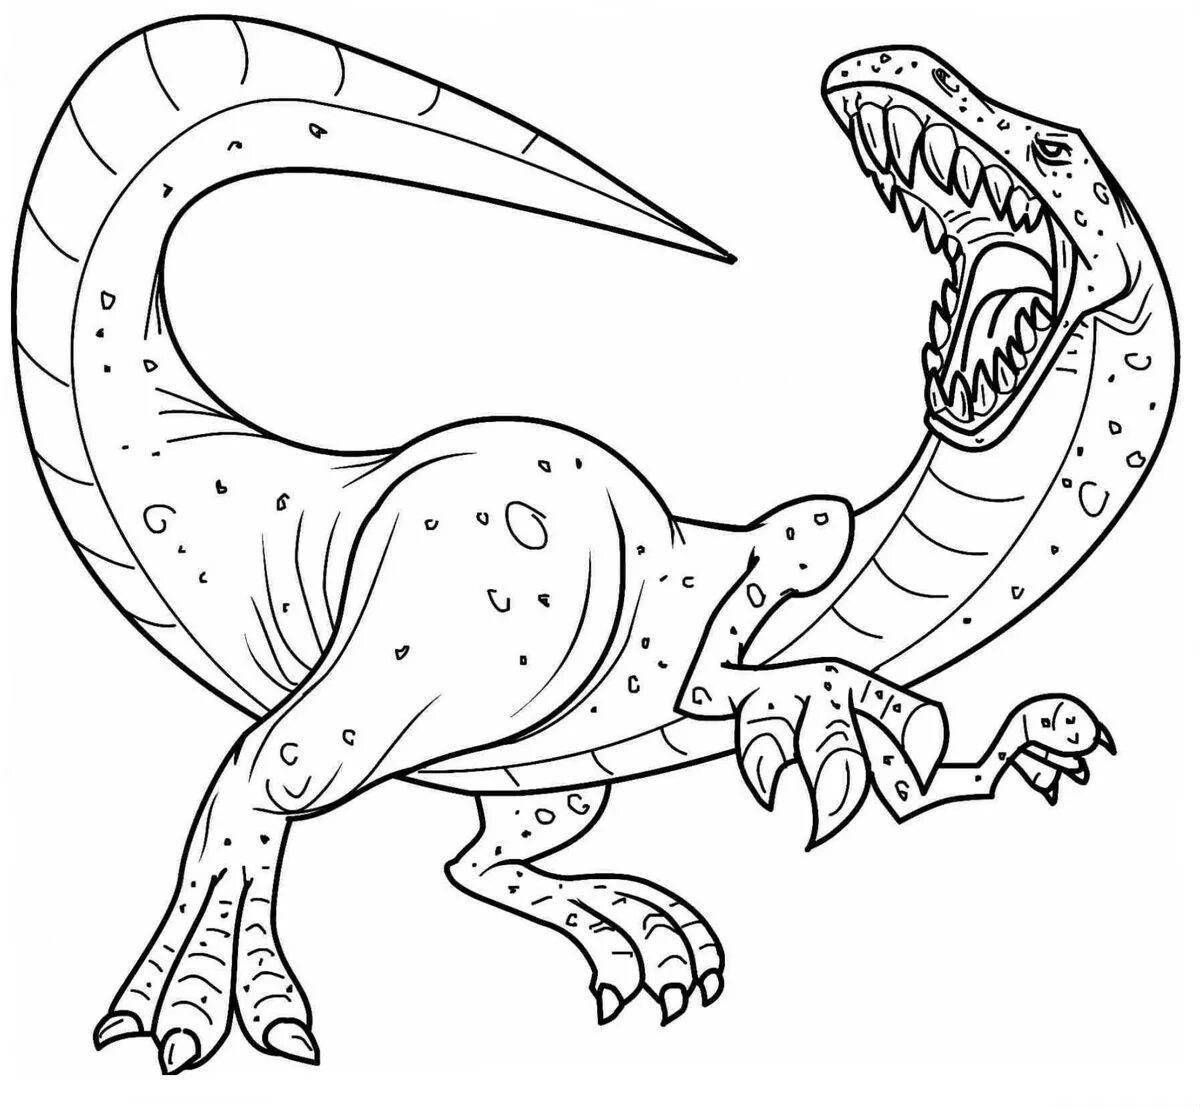 Dinosaur coloring for kids